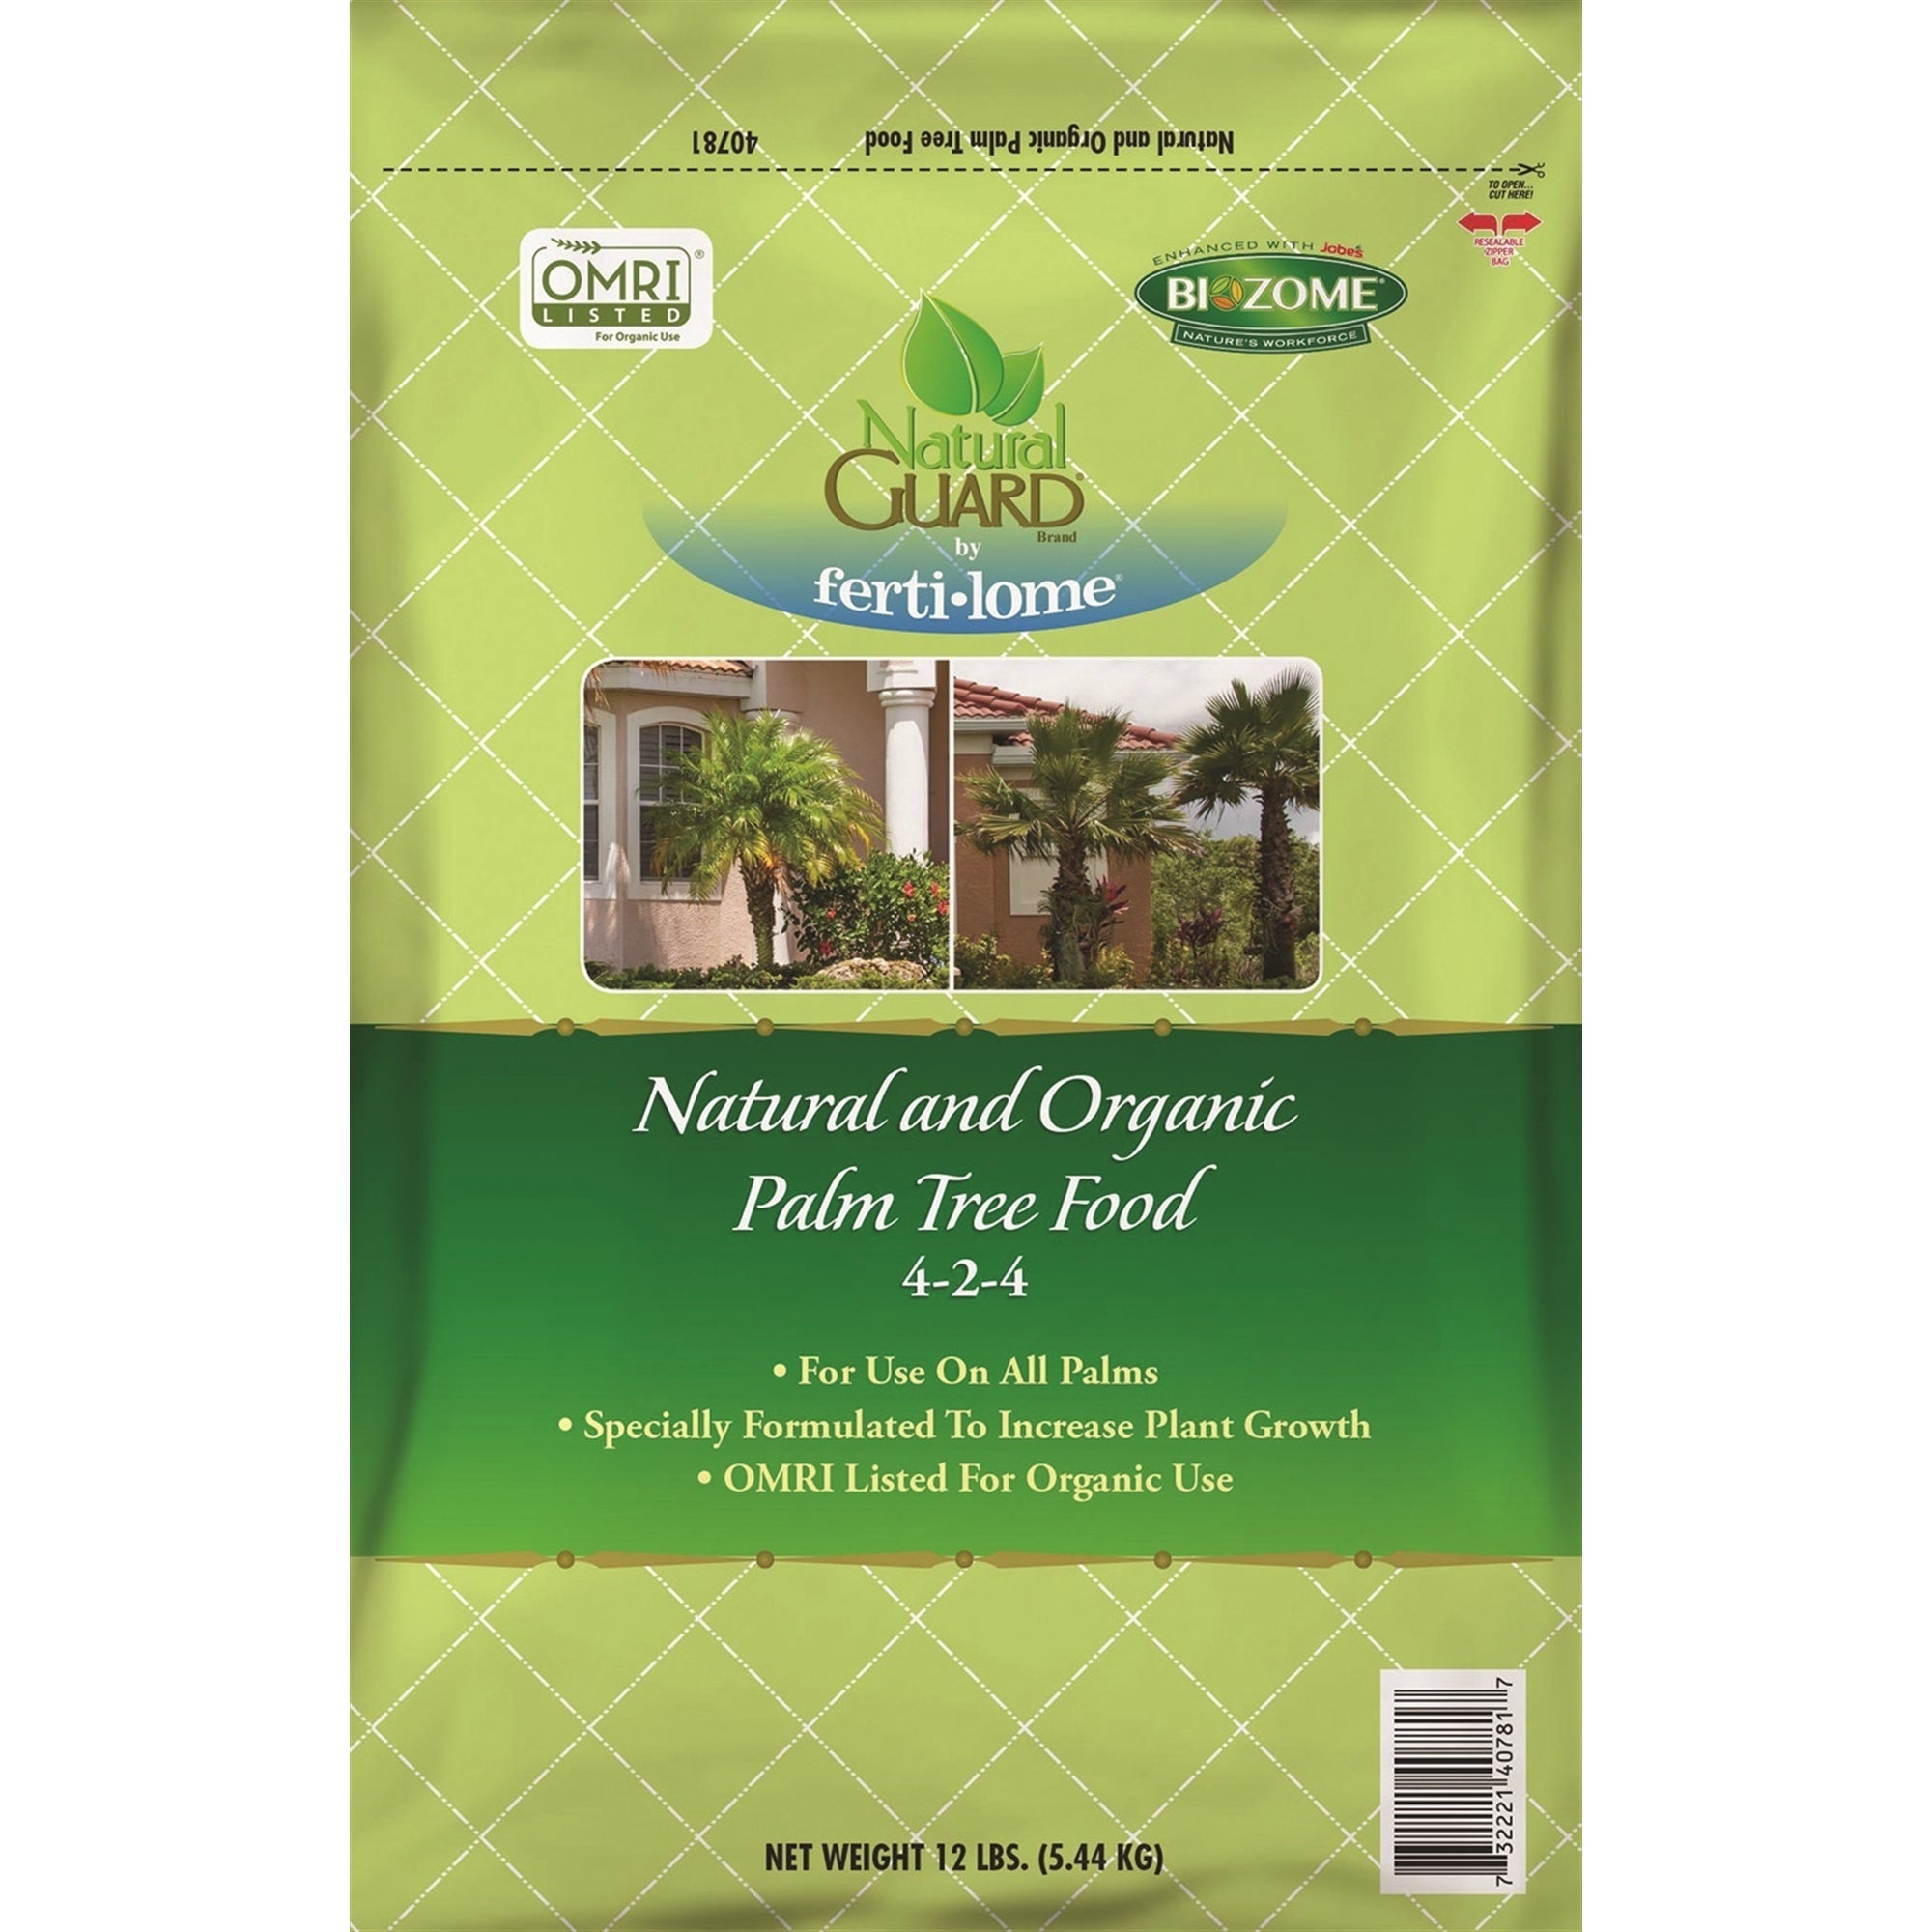 Fertilome Natural Guard Natural and Organic Palm Tree Food 4-2-4